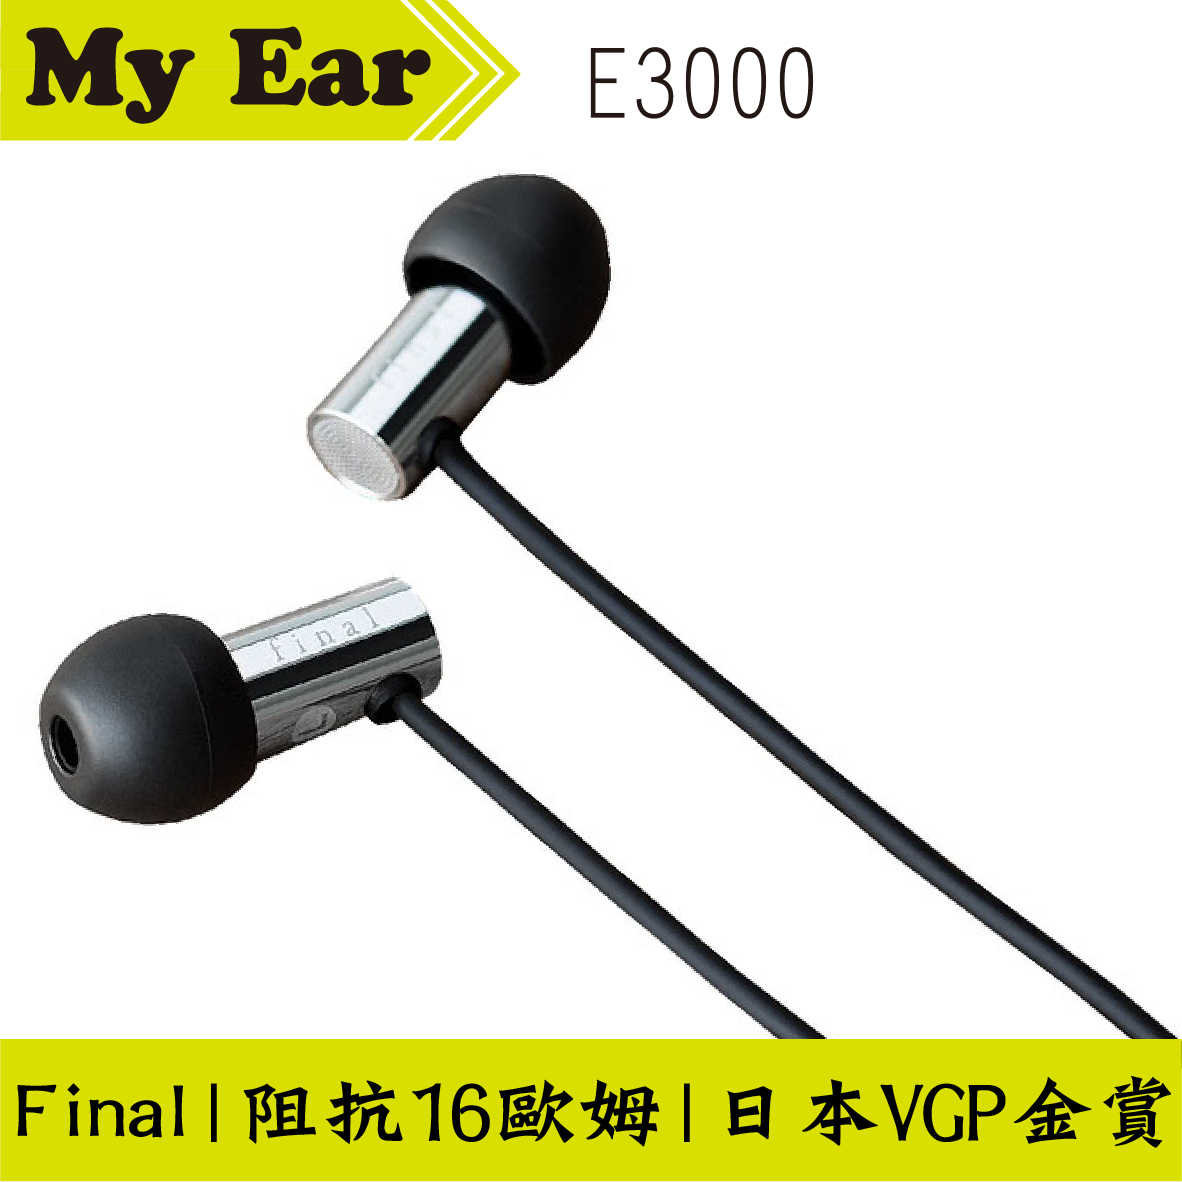 Final E3000 入耳式耳機 日本VGP金賞 | My Ear 耳機專門店